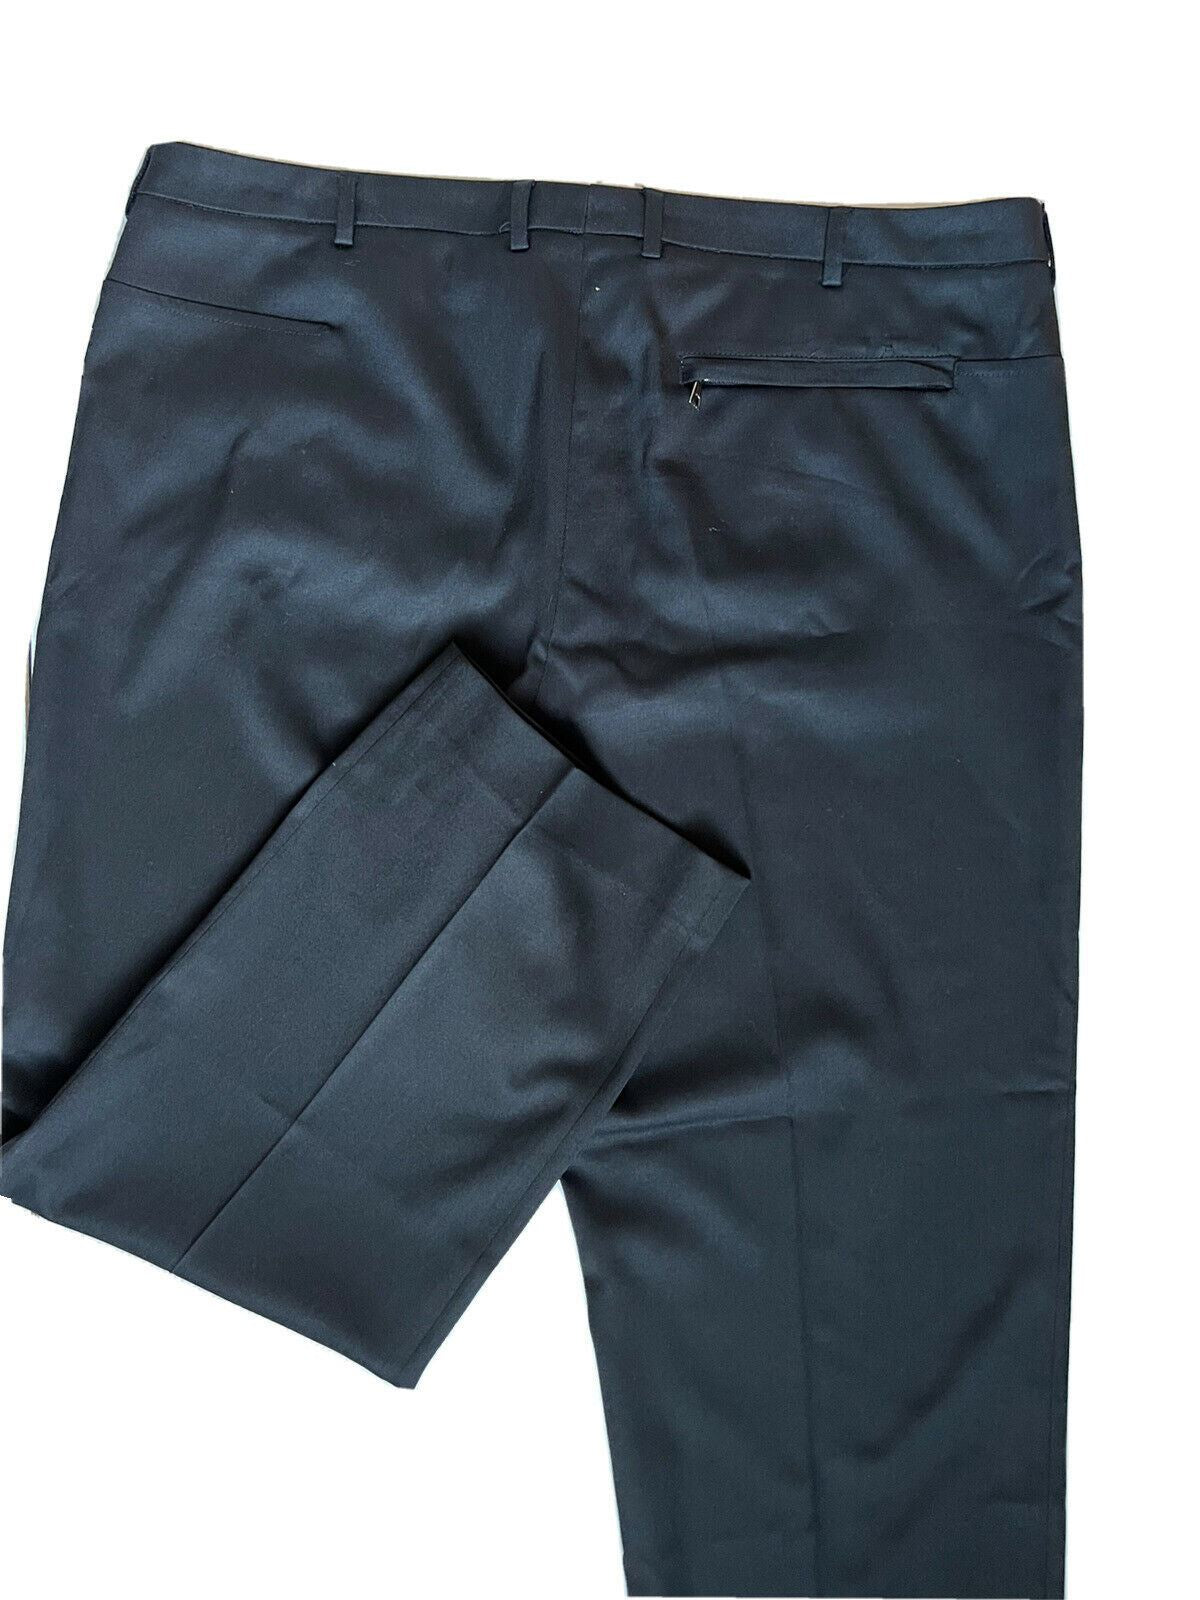 NWT $690 DSQUARED2 Men's Wool Modern Dress Pants Black Size 38 US (54 Euro)